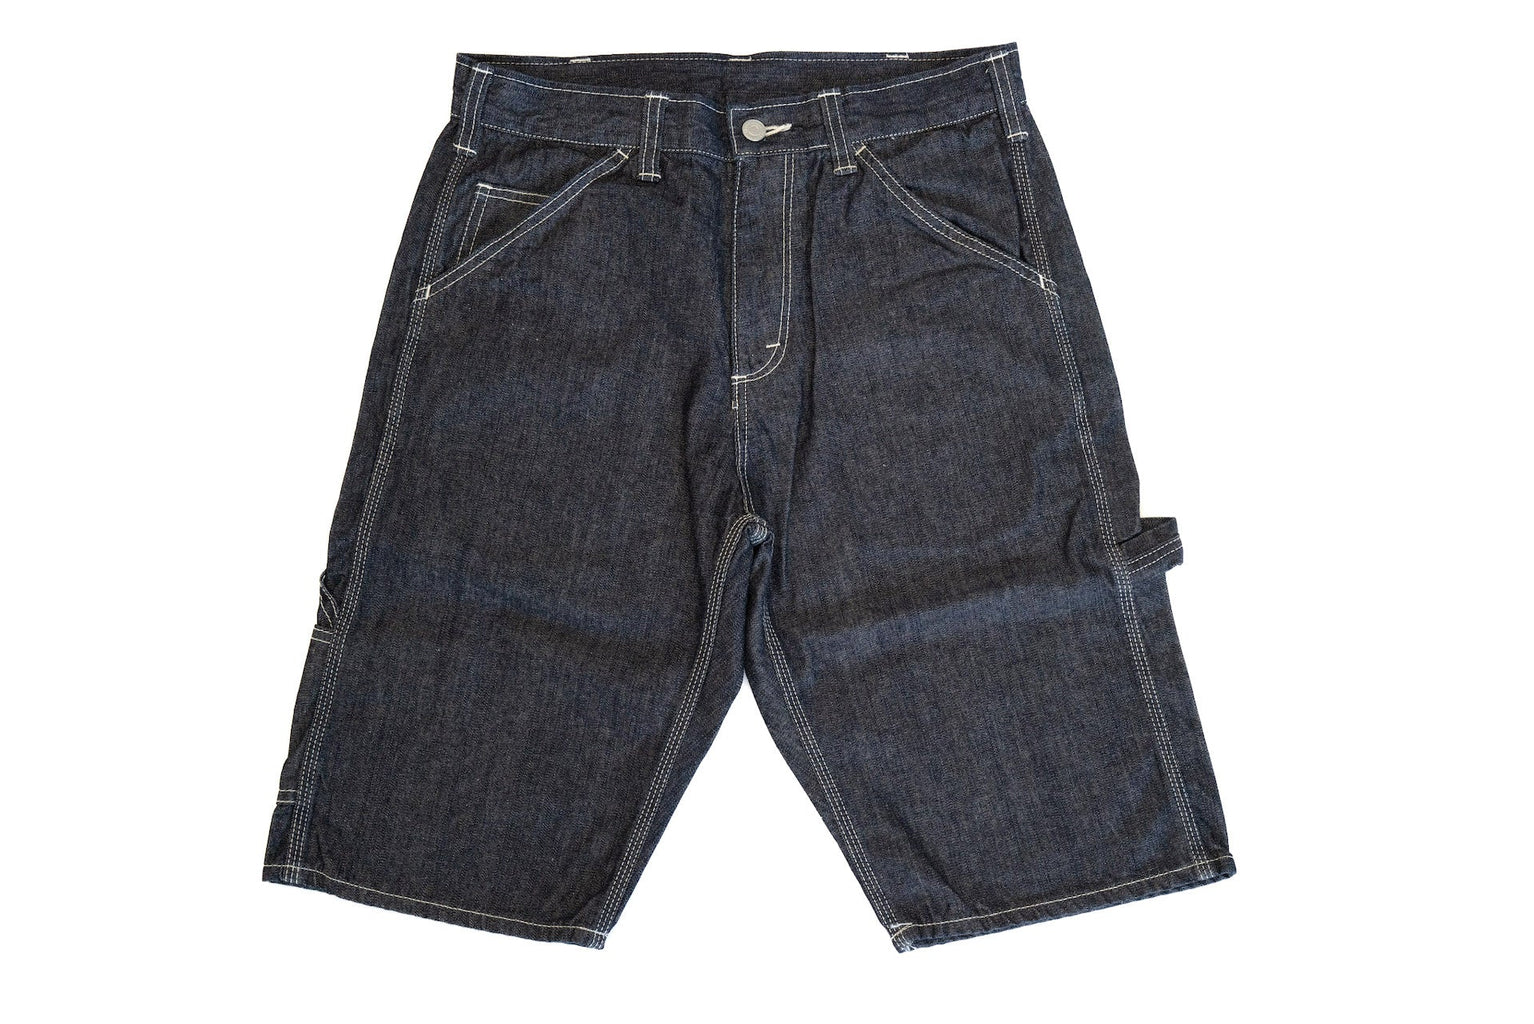 Momotaro Jeans Jacquard Easy Shorts - Indigo